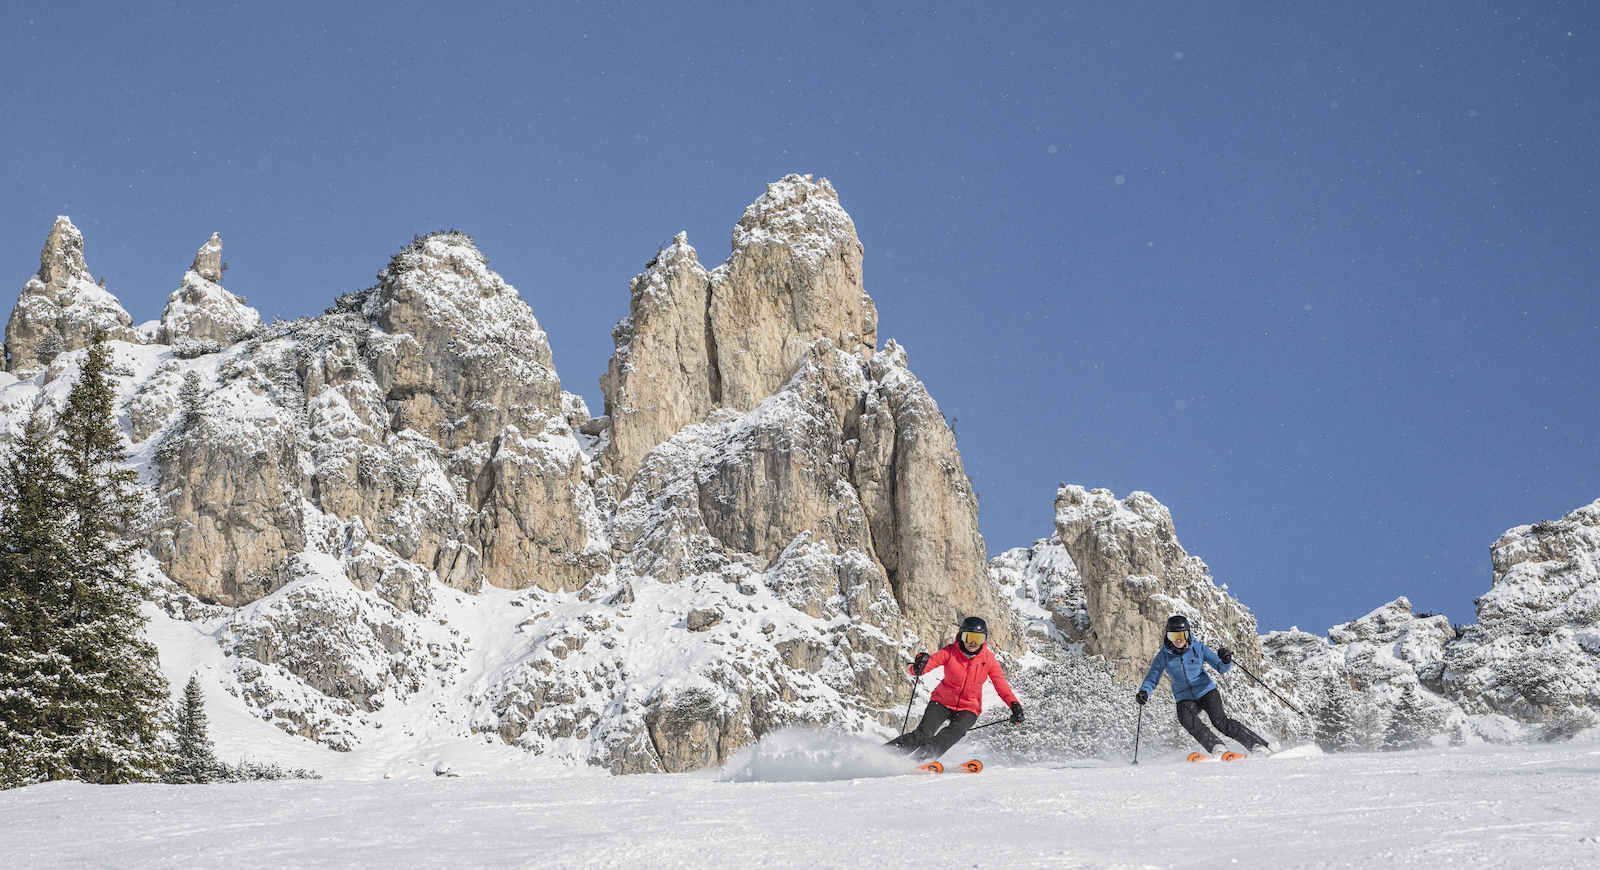 Two skiers at Dolomiti Superski